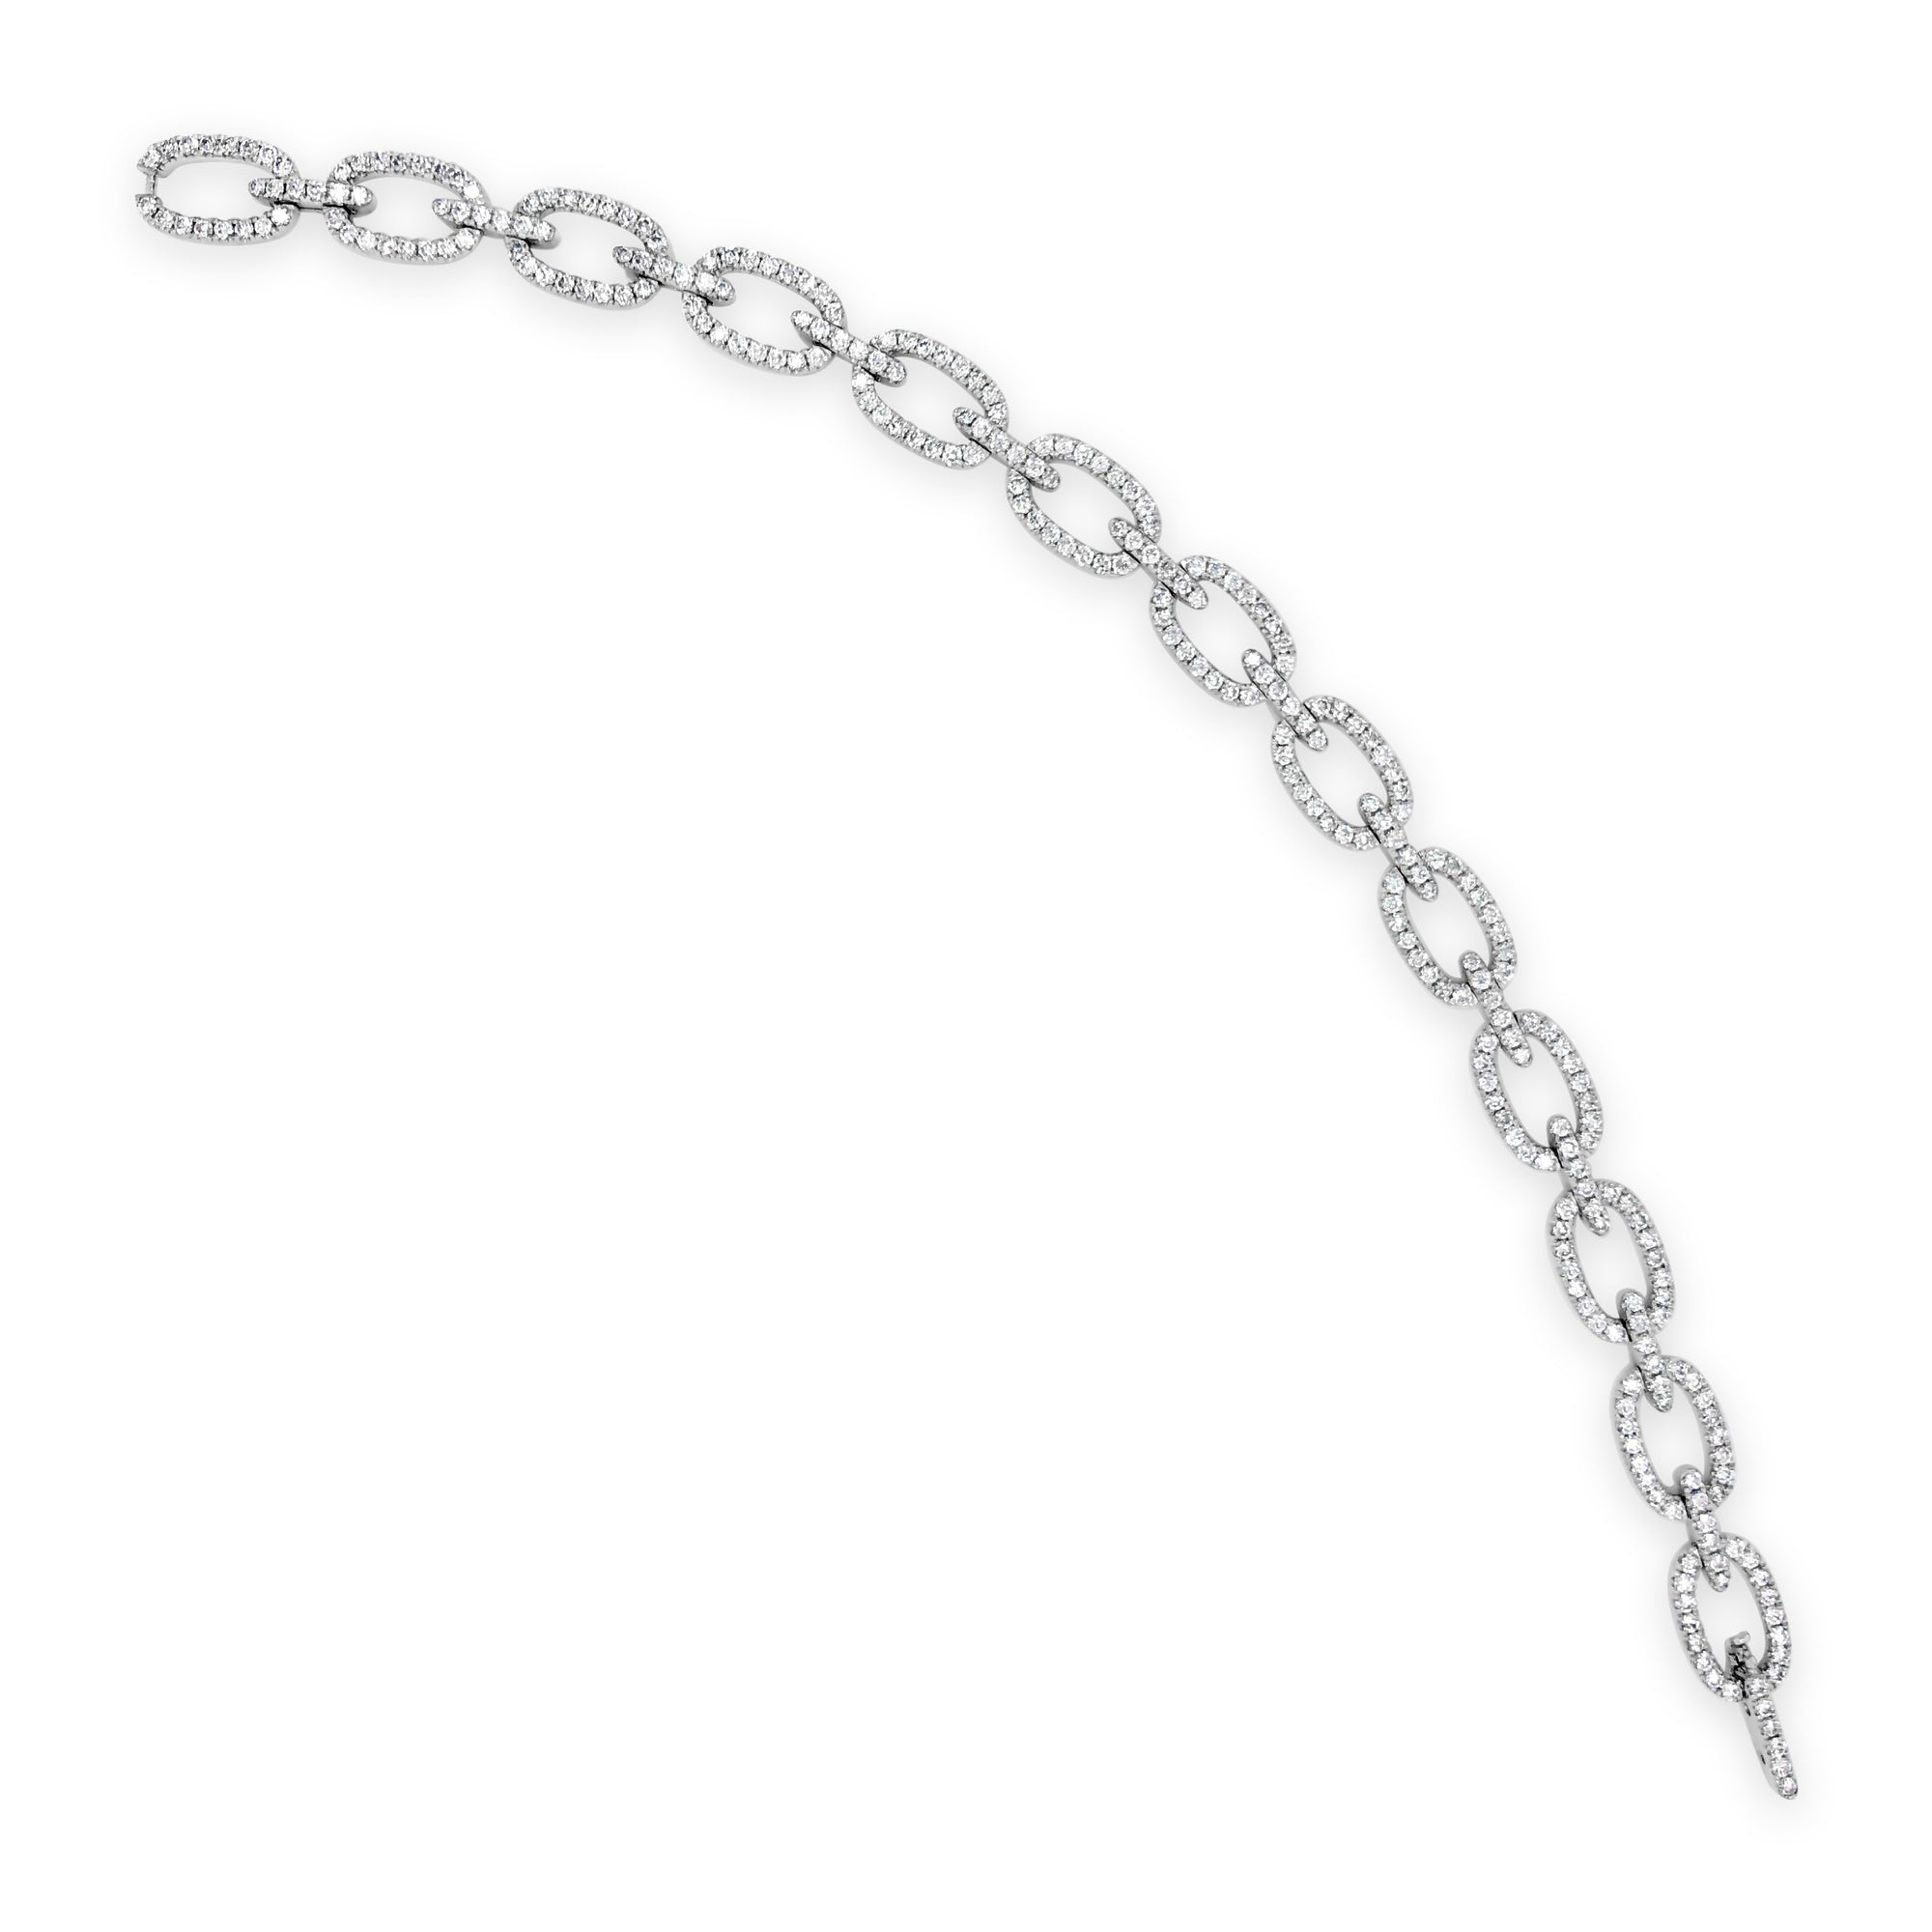 Diamond Eternity Link Bracelet -14K white gold weighing 13.88 grams -286 round diamonds totaling 3.51 carats